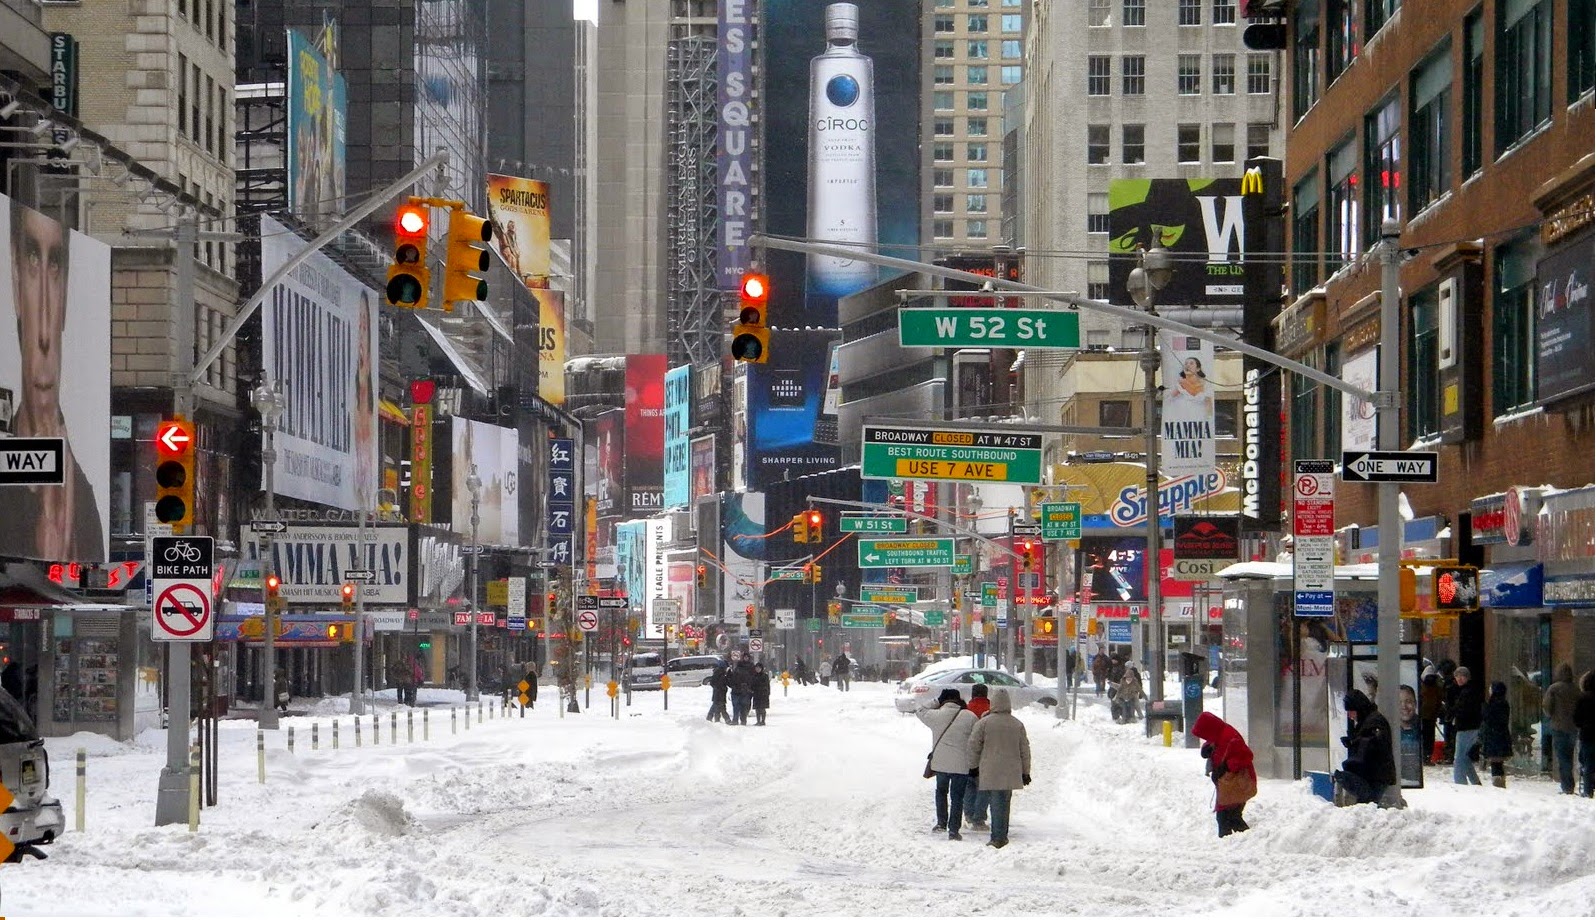 Америка зимнее время. Зимний Нью-Йорк. Нью-Йорк Таймс сквер. Зимний Нью-Йорк 5 Авеню. Снежный Нью Йорк.